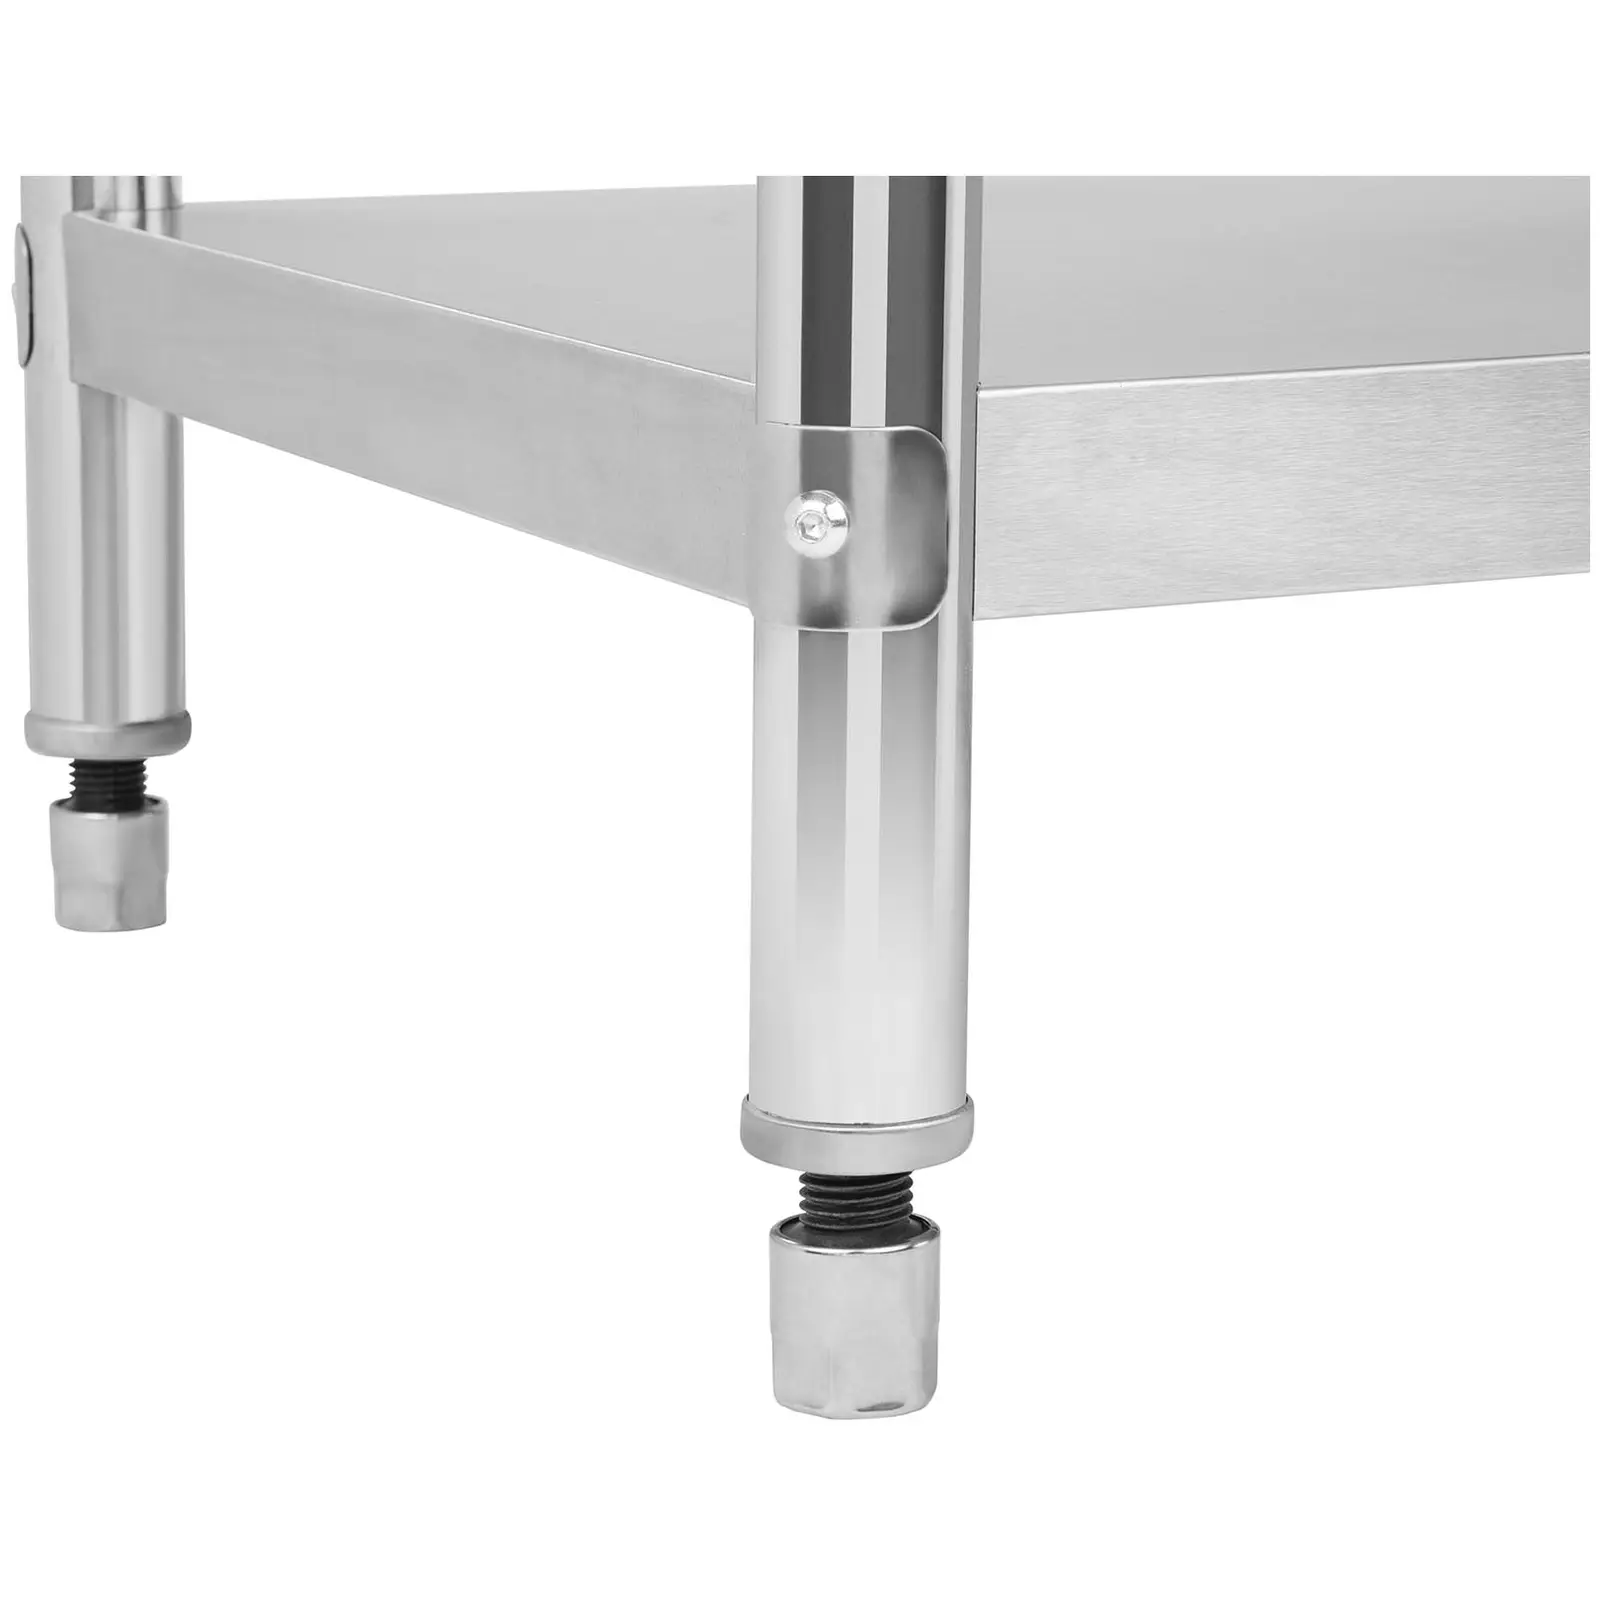 Set - Table inox avec étagère amovible - 120 x 70 cm